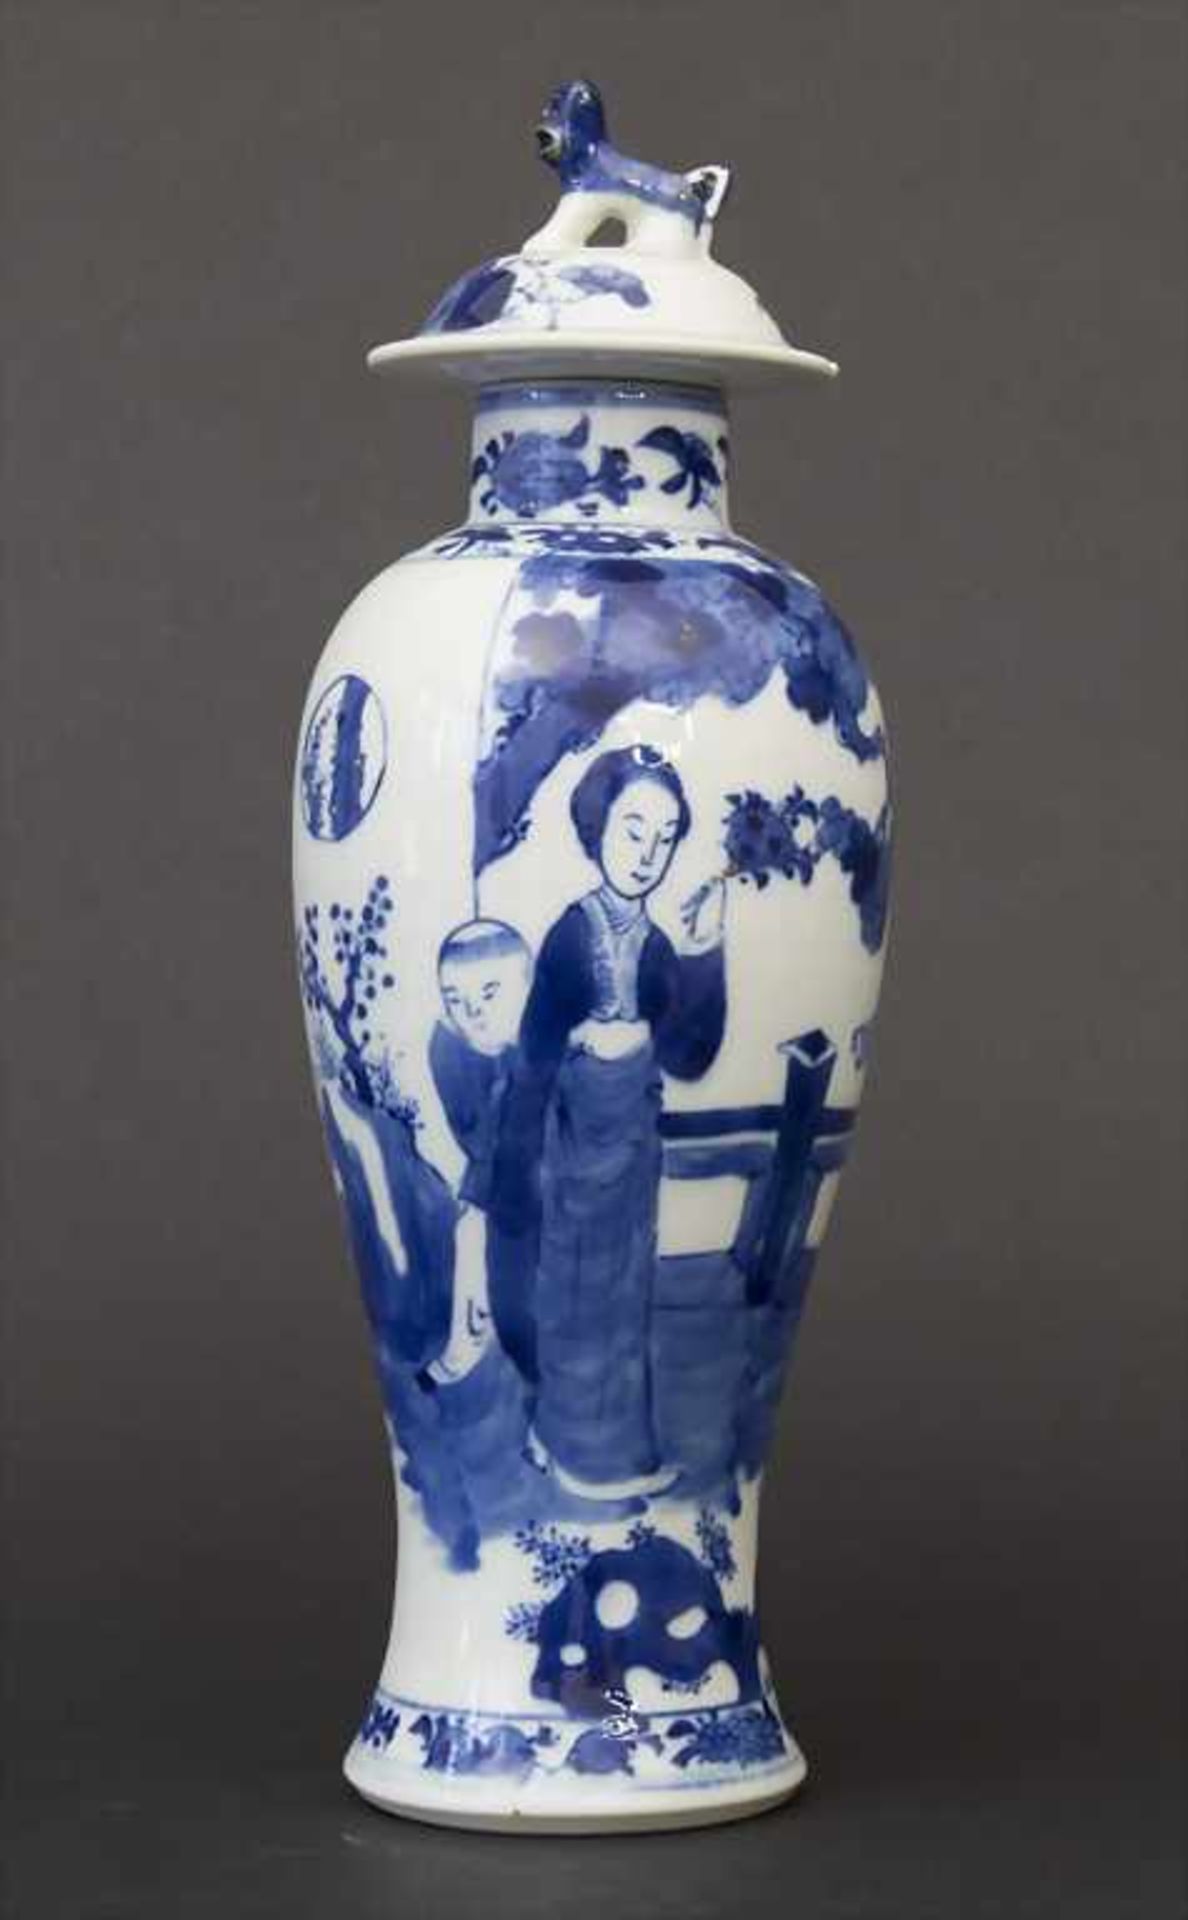 Deckelvase, Kangxi-Periode, ChinaMaterial: Porzellan, mit Blaumalerei,Marke: vier Felder Marke,Maße: